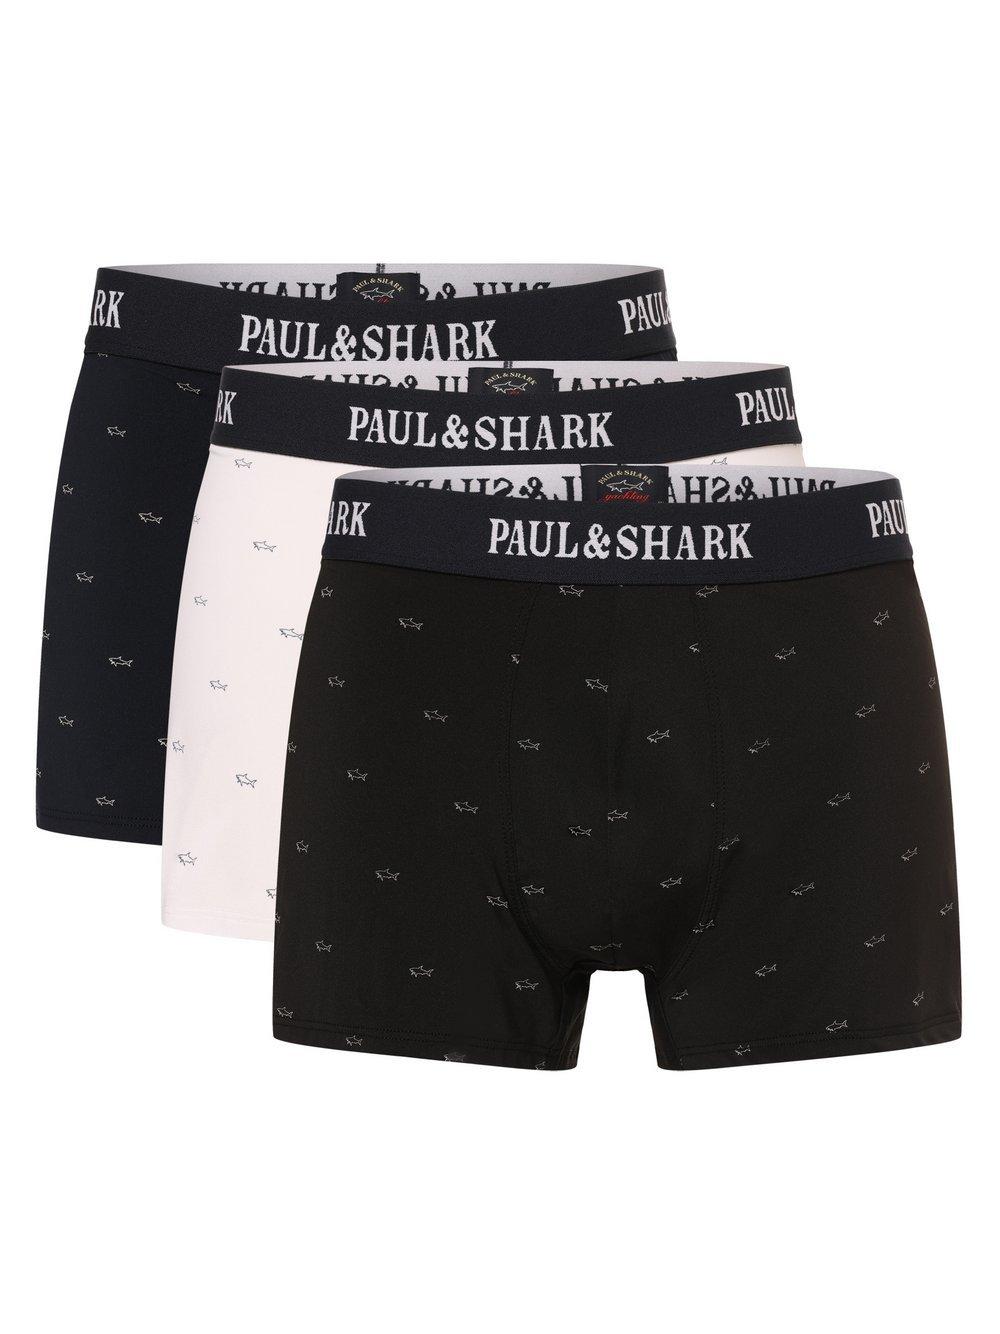 Paul & Shark Pants im 3er-Pack Herren Baumwolle gemustert, weiß von Paul & Shark